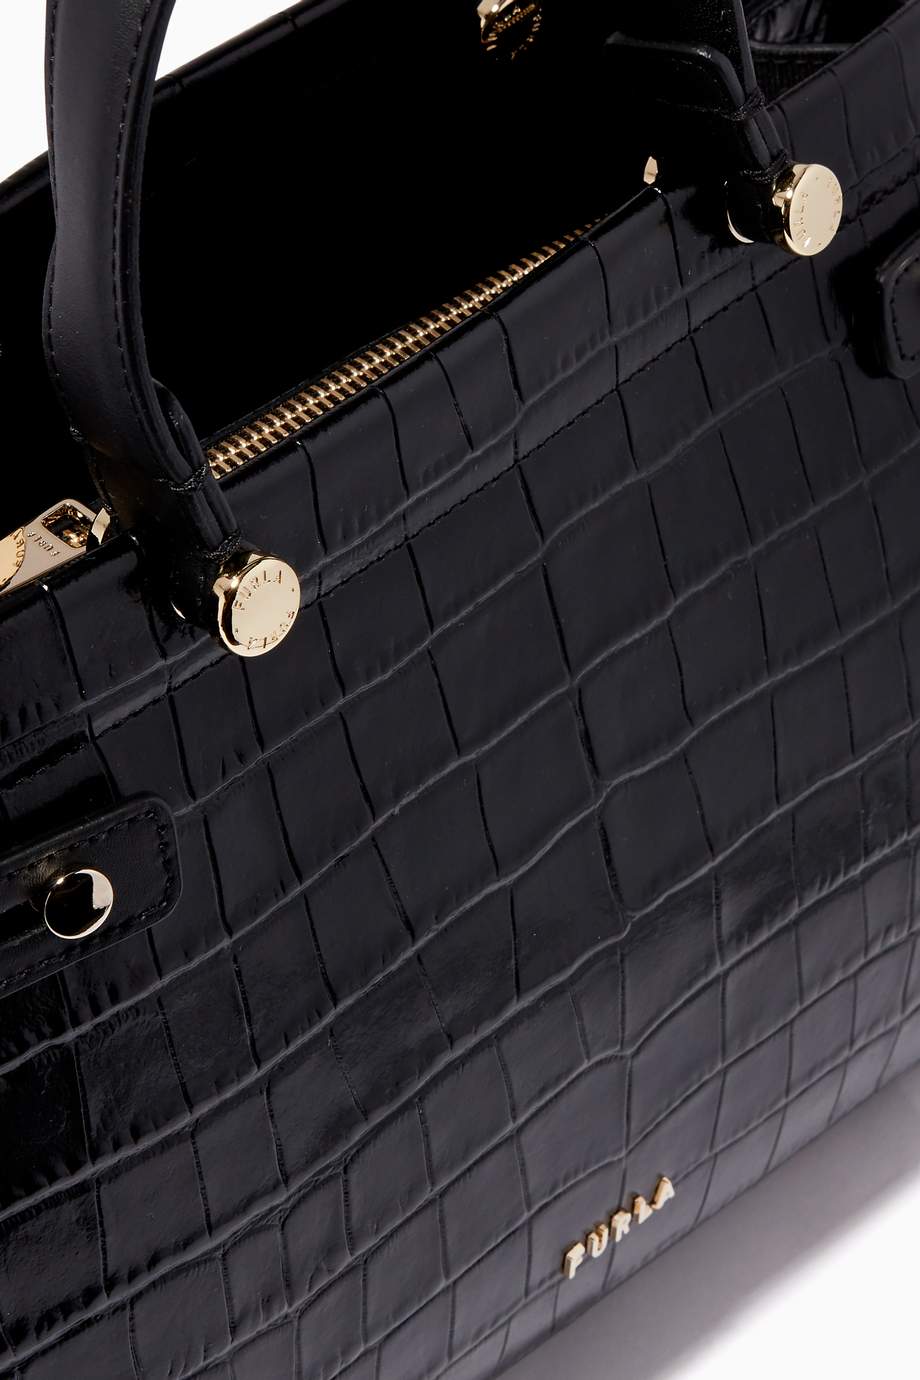 Shop Furla Black Furla Lady M Tote Bag In Croc Embossed Leather For